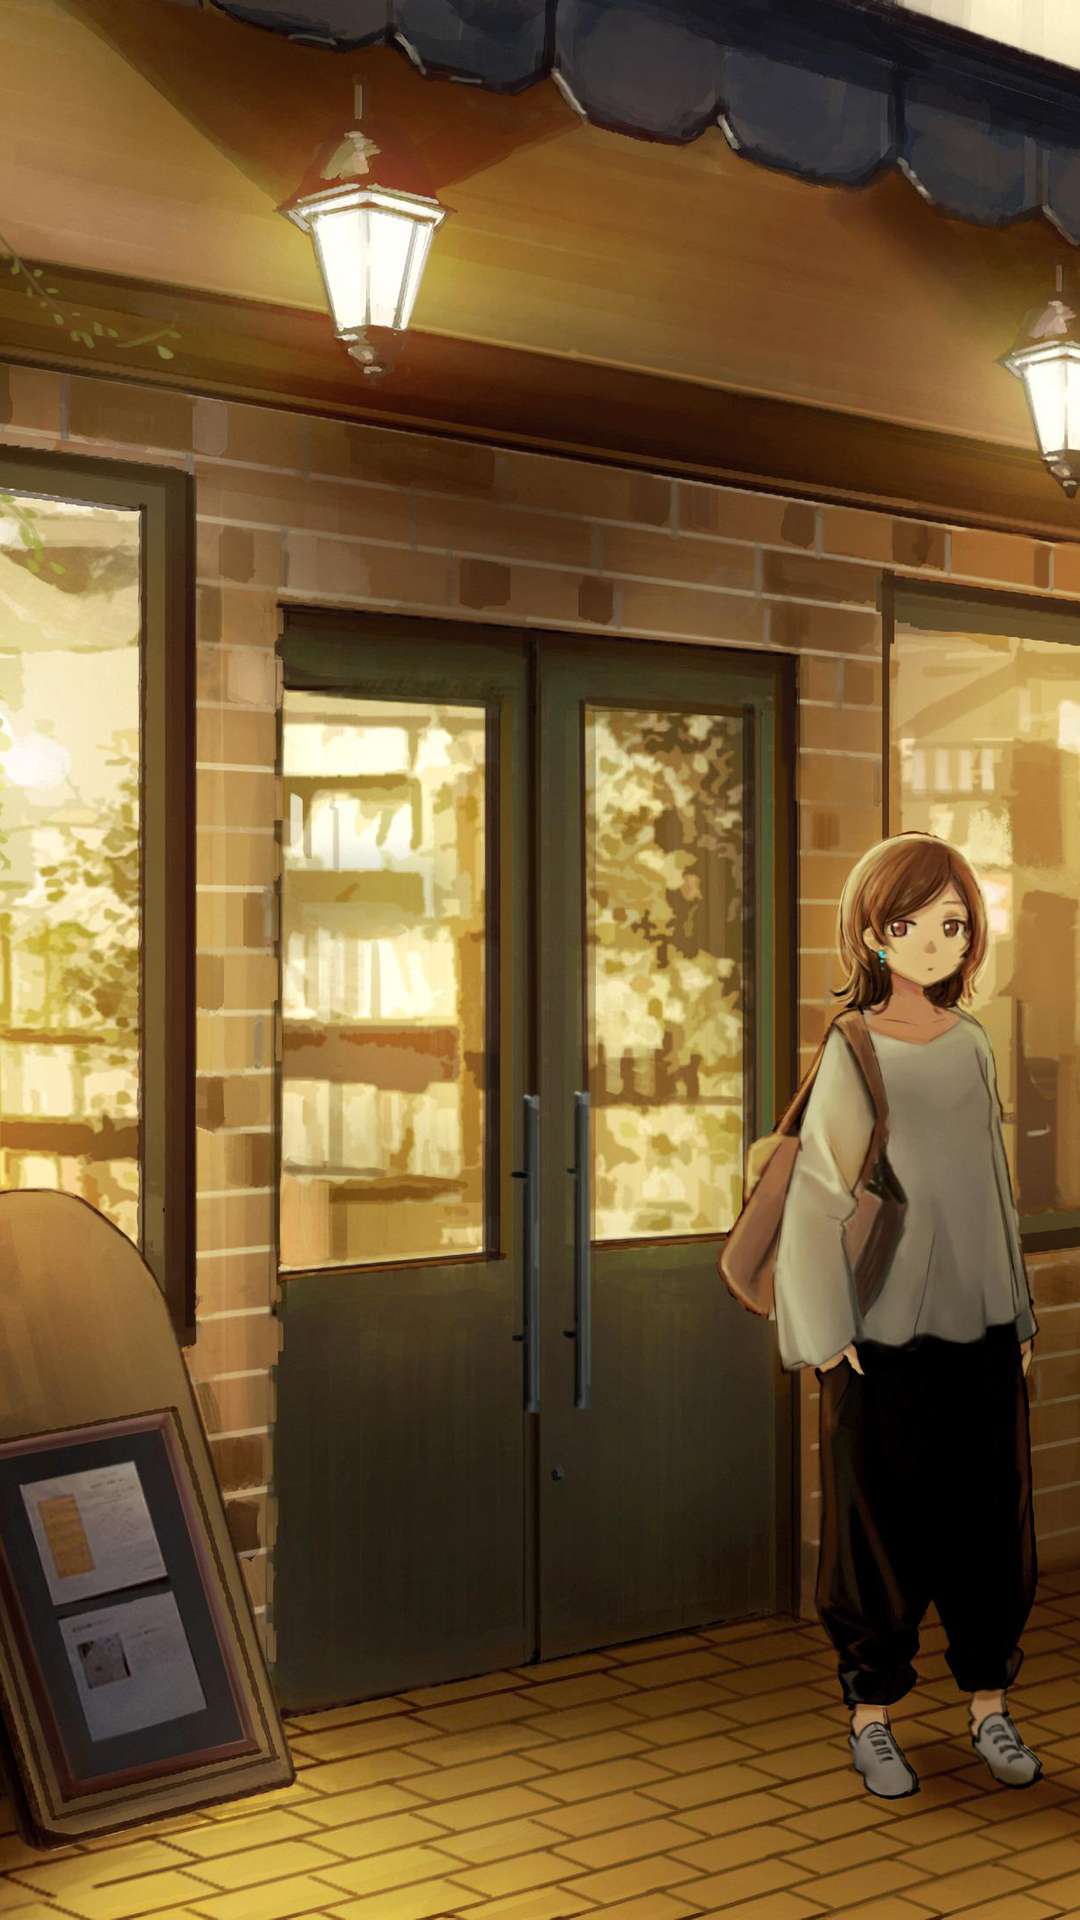 Anime Cafe Background Images - Free Download on Freepik